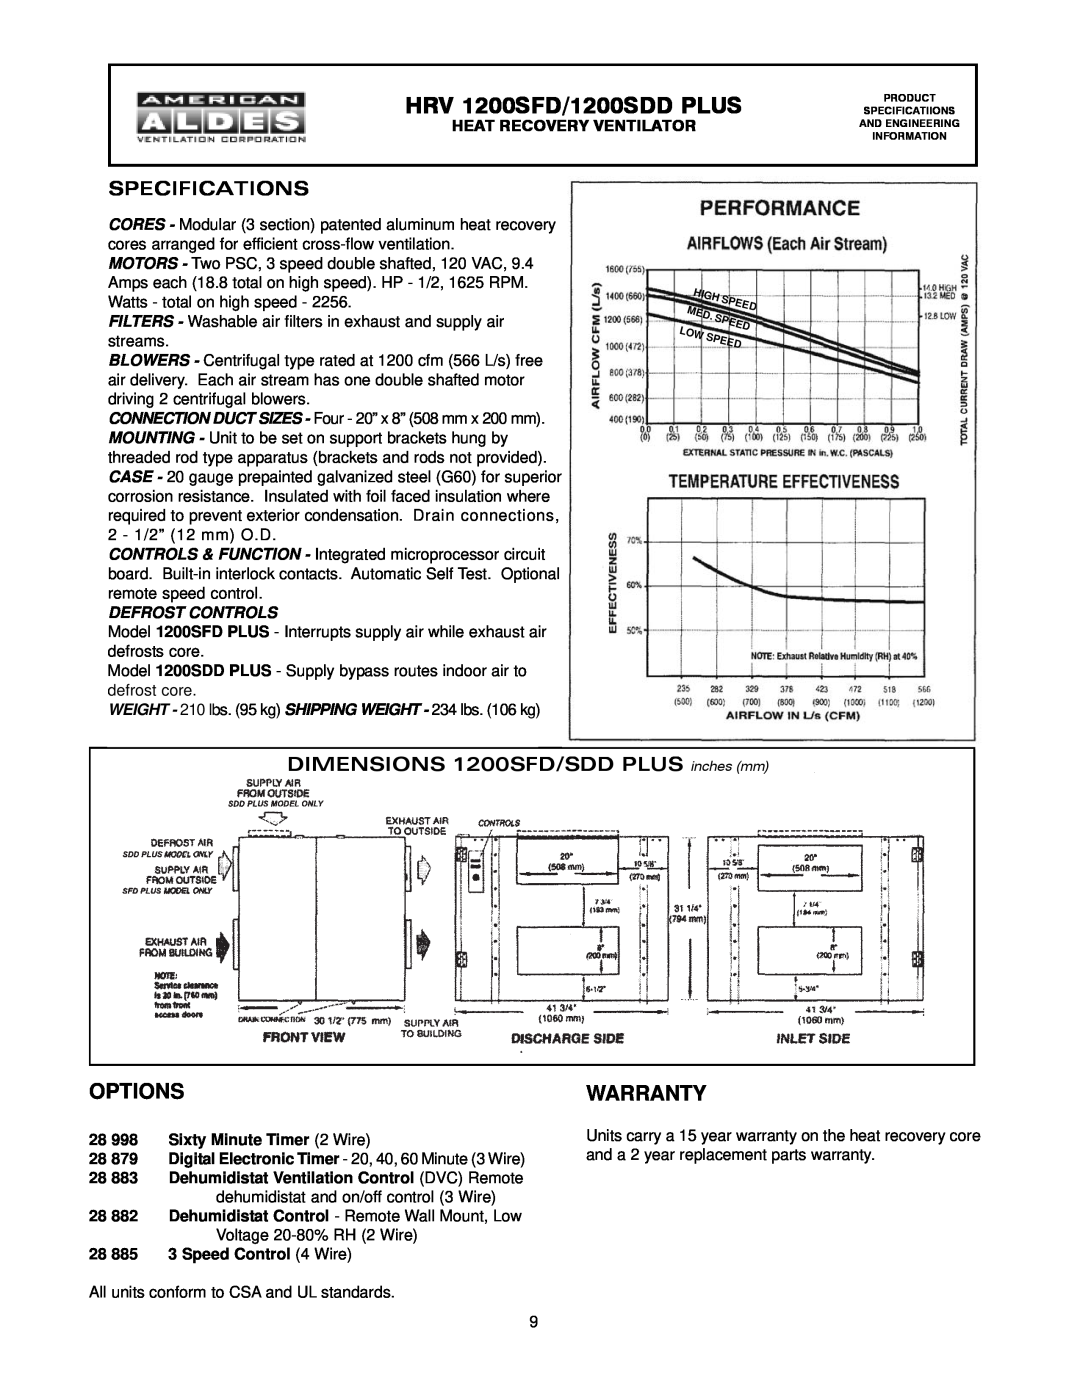 American Aldes HRV 700SDD manual HRV 1200SFD/1200SDD PLUS, Options, Warranty, Specifications, Heat Recovery Ventilator 